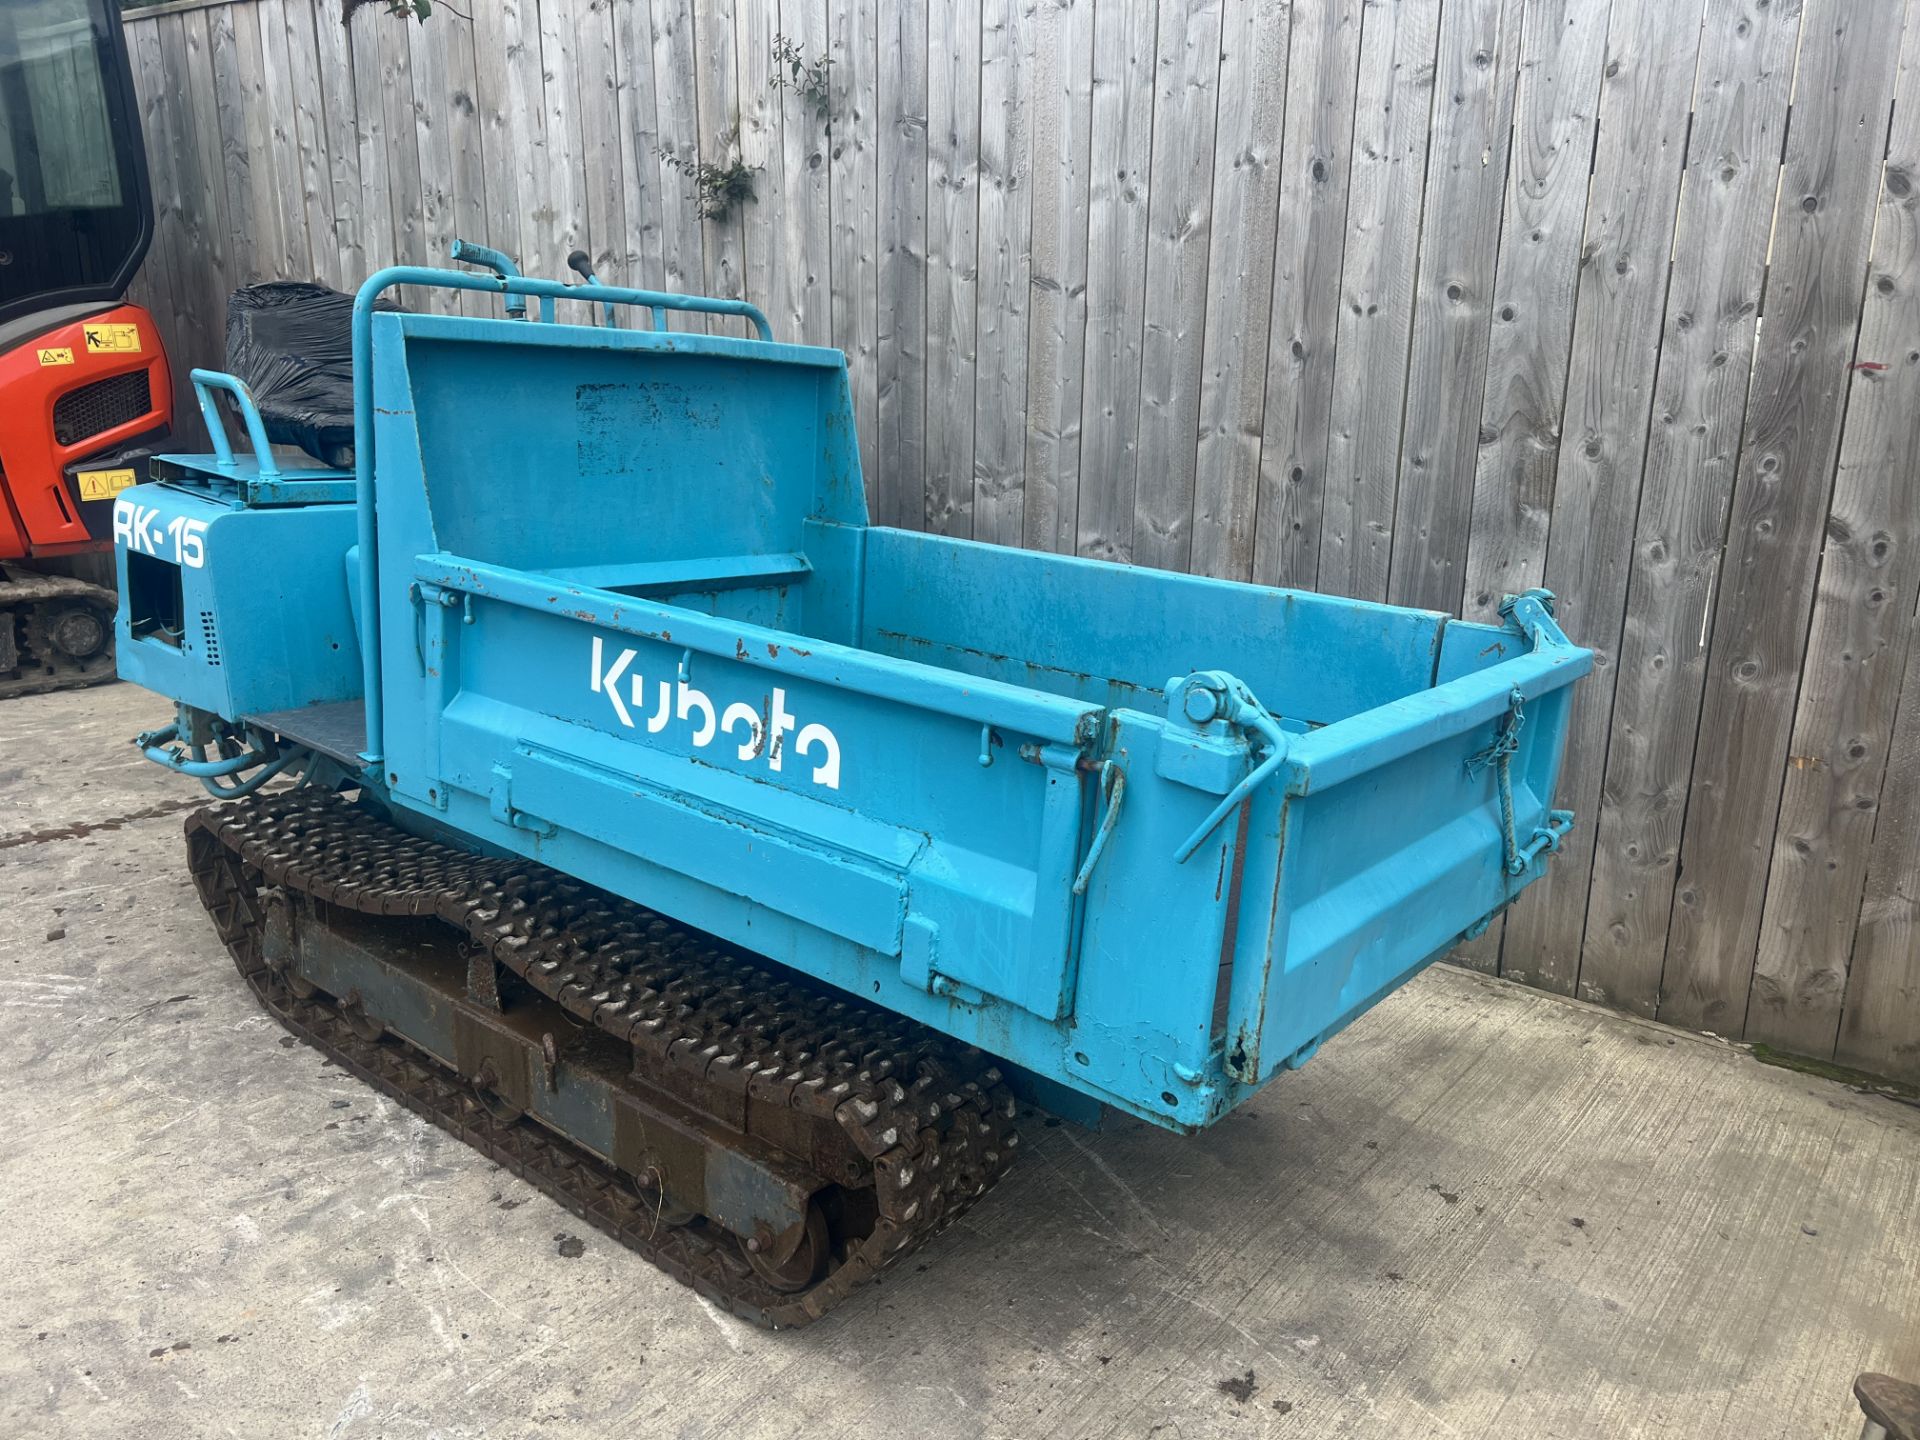 Kubota KH15 Tracked dumper - Image 3 of 7